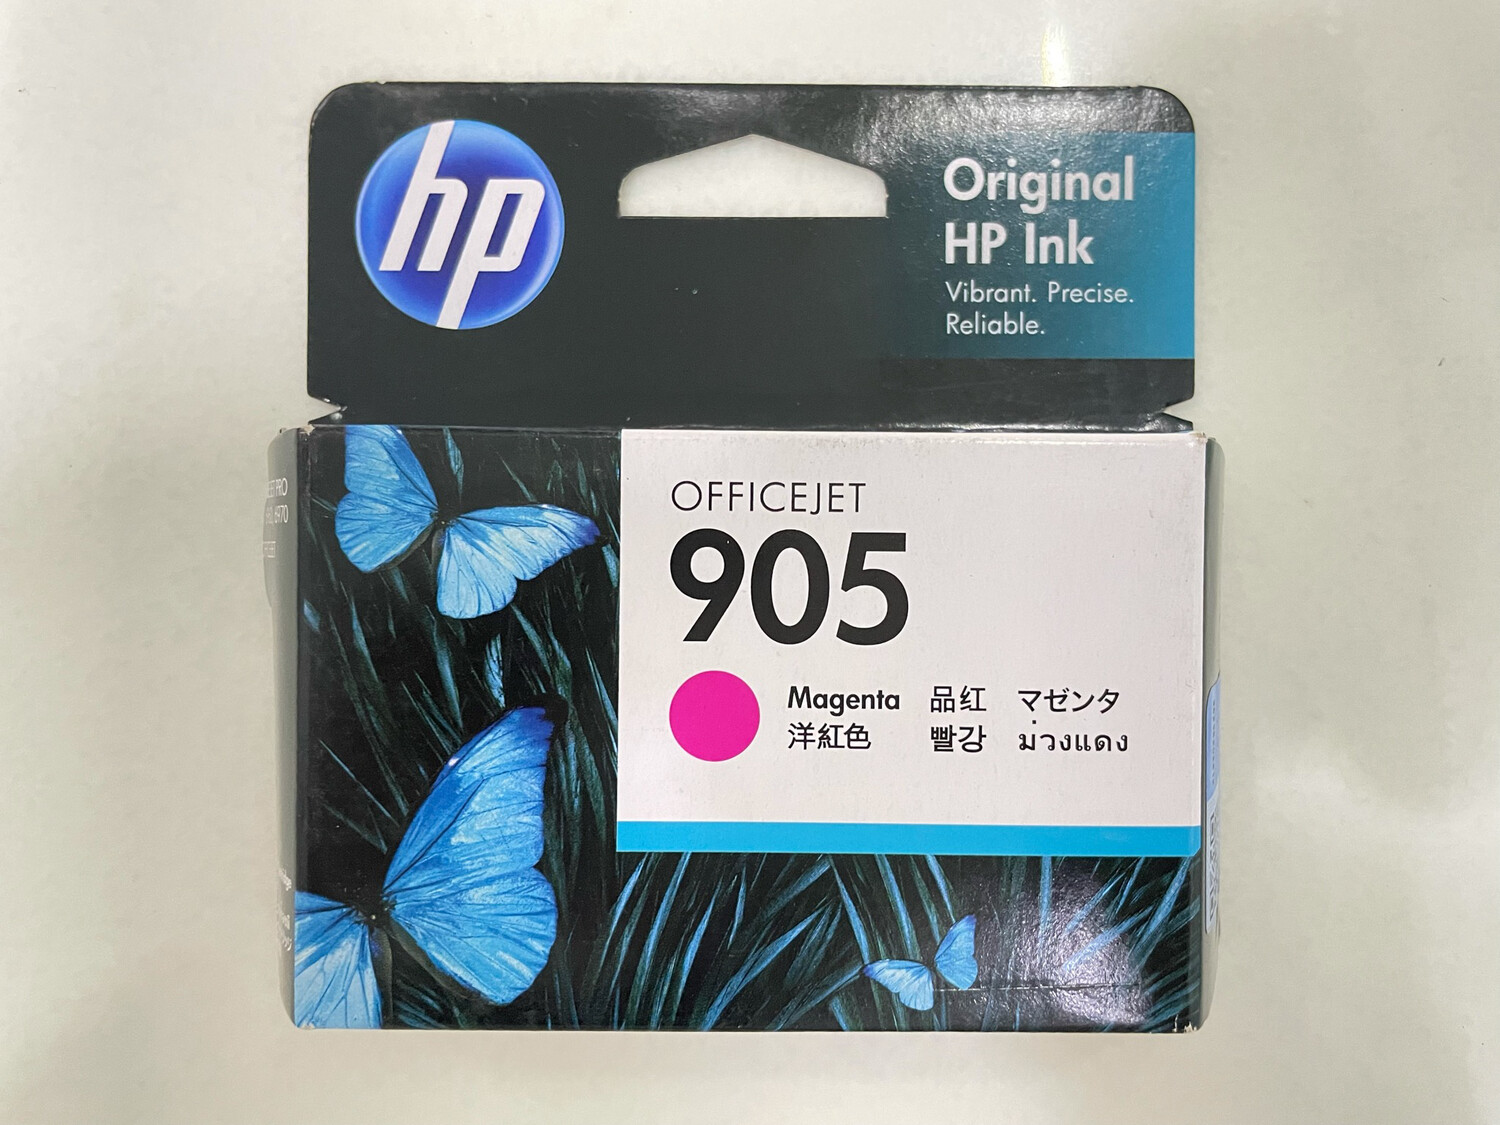 HP Officejet 905 Ink Cartridge, Magenta, T6L93MAA